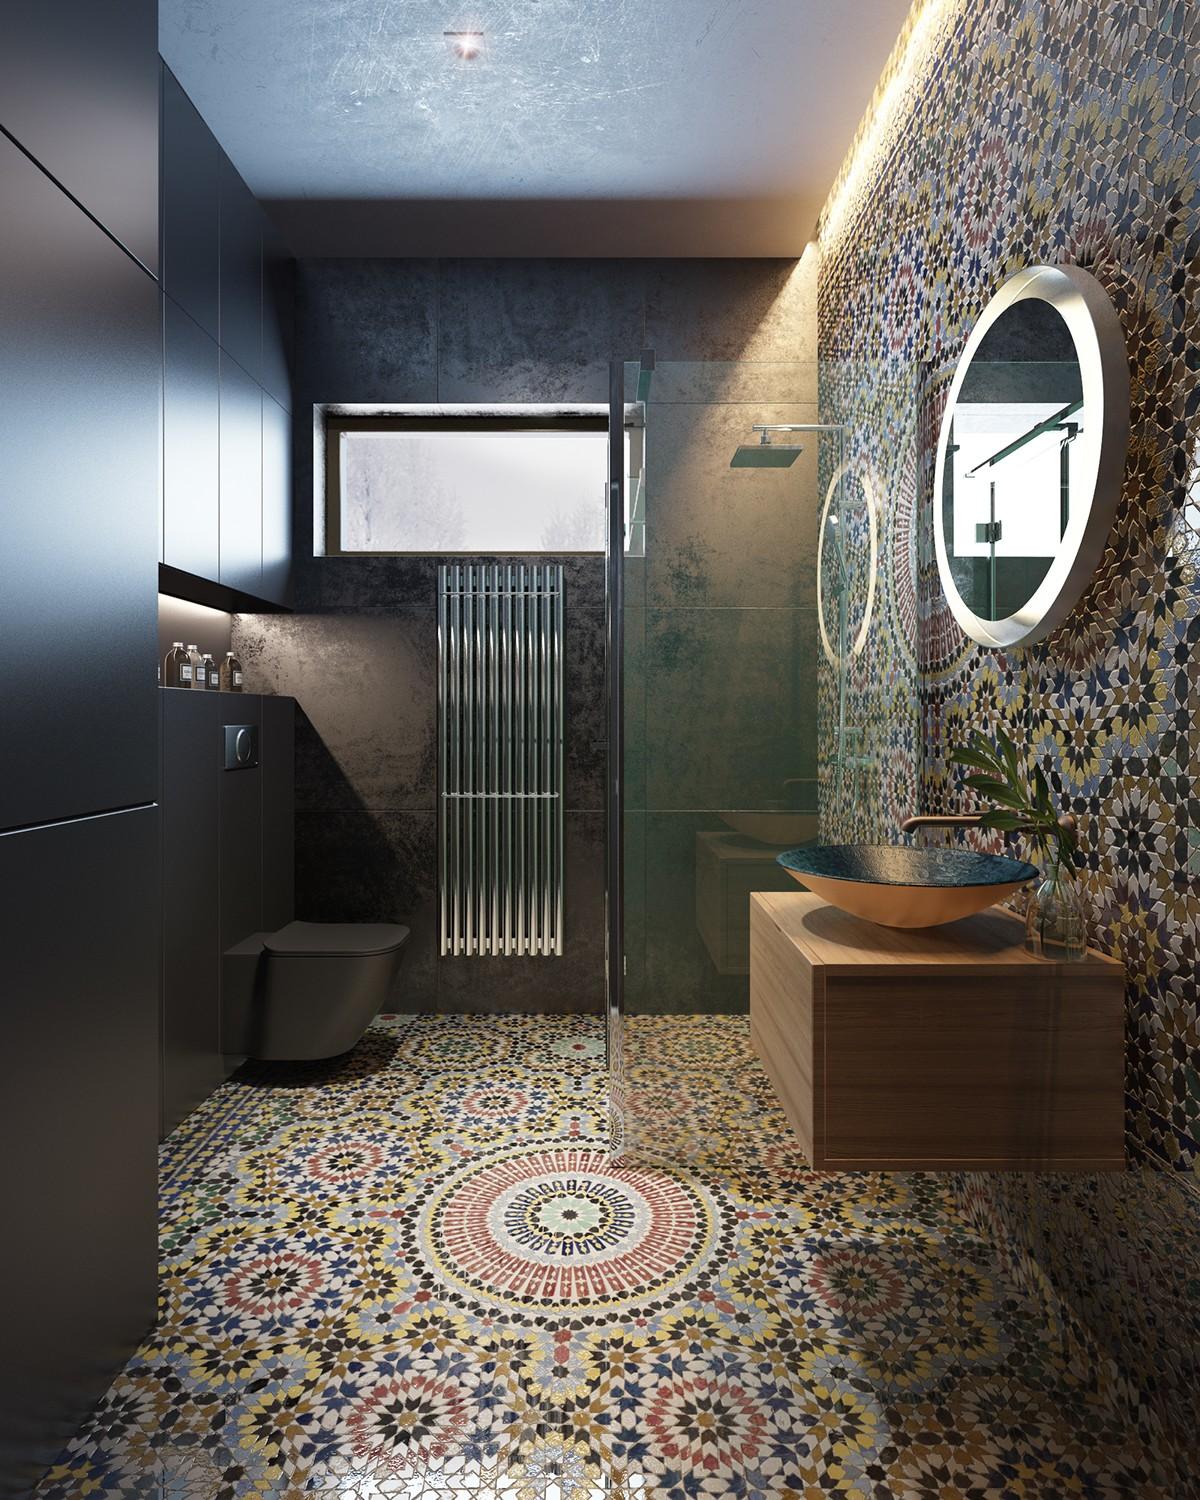 great bathroom with Moroccan tiles "width =" 1200 "height =" 1500 "srcset =" https://mileray.com/wp-content/uploads/2016/09/amazing-bathroom-with-moroccan-tile-Oleksii-Karman .jpg 1200w, https://mileray.com/wp-content/uploads/2016/09/amazing-bathroom-with-moroccan-tile-Oleksii-Karman-240x300.jpg 240w, https://mileray.com/wp -content / uploads / 2016/09 / amazing-bathroom-with-Moroccan-tiles-Oleksii-Karman-768x960.jpg 768w, https://mileray.com/wp-content/uploads/2016/09/amazing-bathroom- with-maroccan-tile-Oleksii-Karman-819x1024.jpg 819w, https://mileray.com/wp-content/uploads/2016/09/amazing-bathroom-with-moroccan-tile-Oleksii-Karman-696x870.jpg 696w, https://mileray.com/wp-content/uploads/2016/09/amazing-bathroom-with-moroccan-tile-Oleksii-Karman-1068x1335.jpg 1068w, https://mileray.com/wp-content /uploads/2016/09/amazing-bathroom-with-moroccan-tile-Oleksii-Karman-336x420.jpg 336w "sizes =" (maximum width: 1200px) 100vw, 1200px